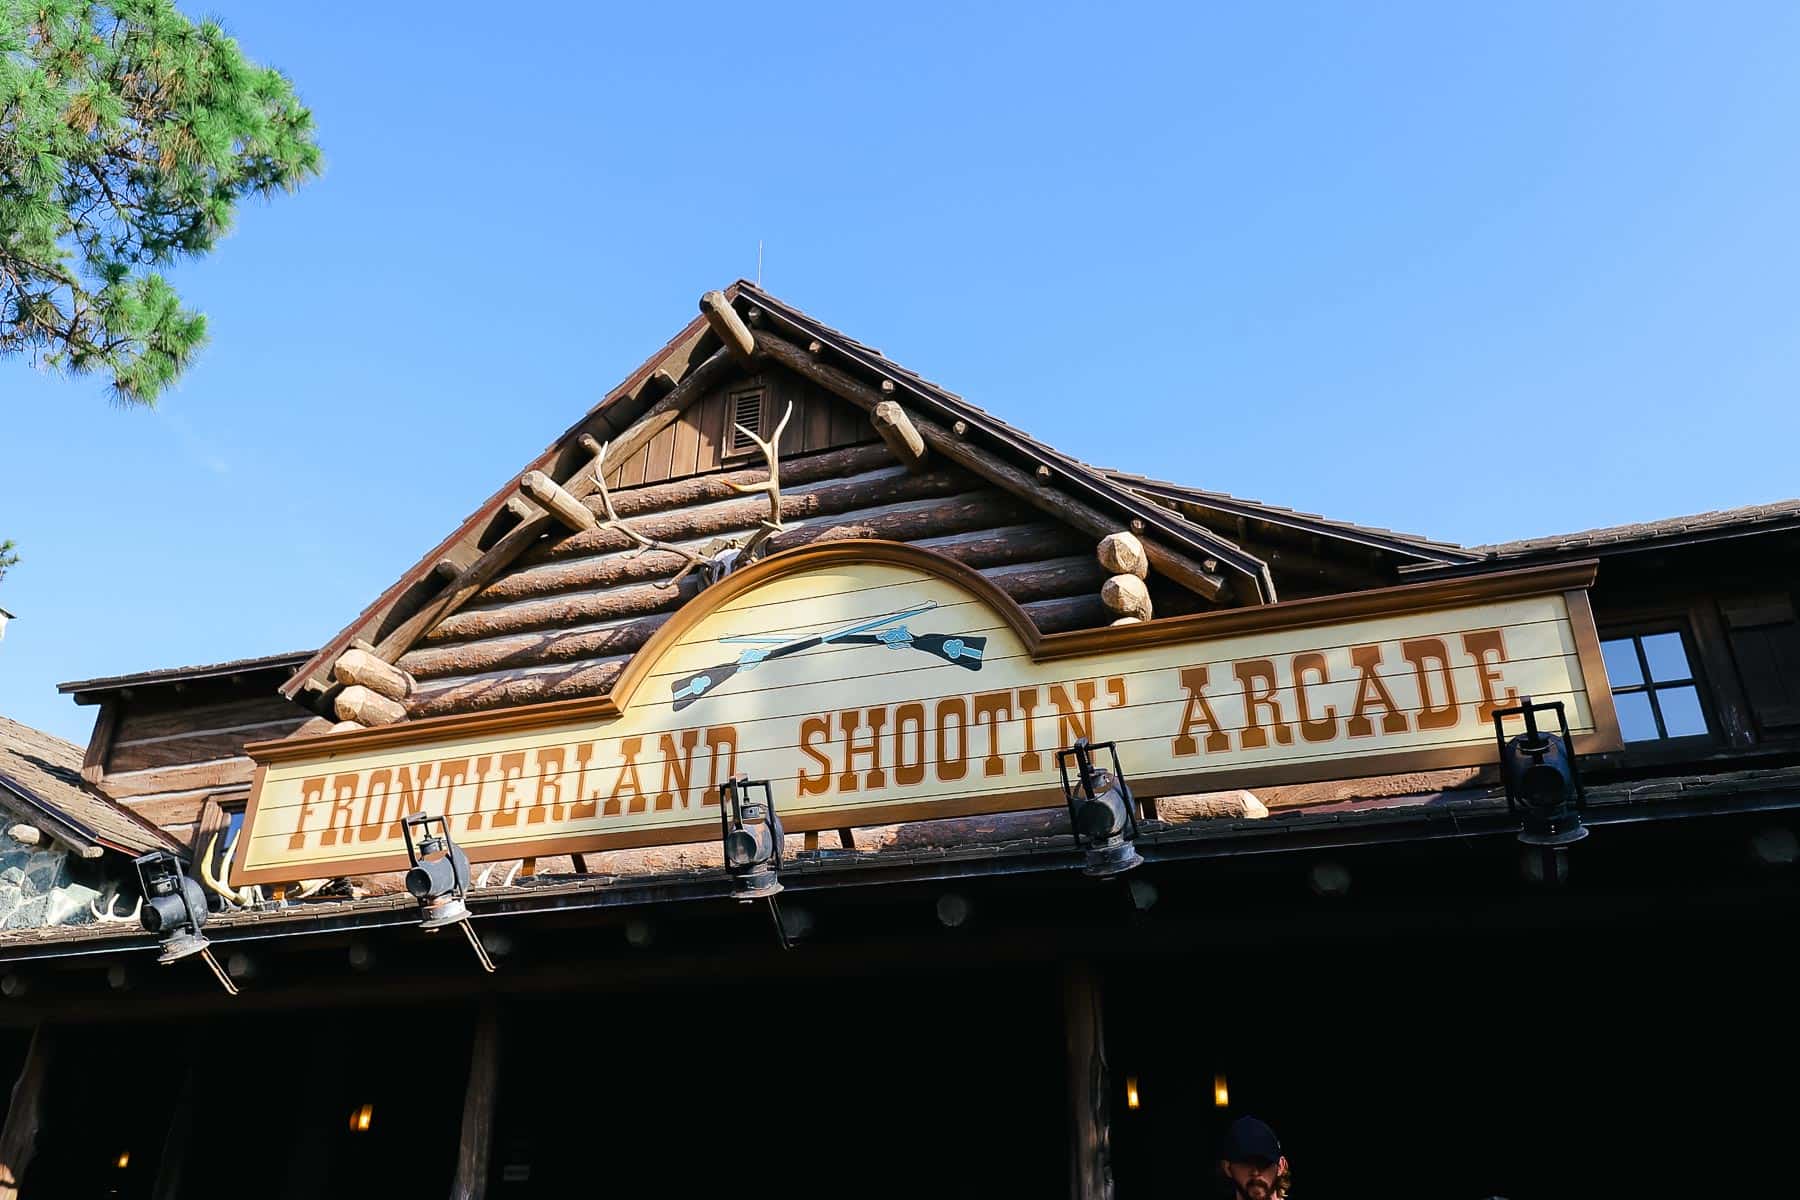 Frontierland Shootin' Arcade at Magic Kingdom 